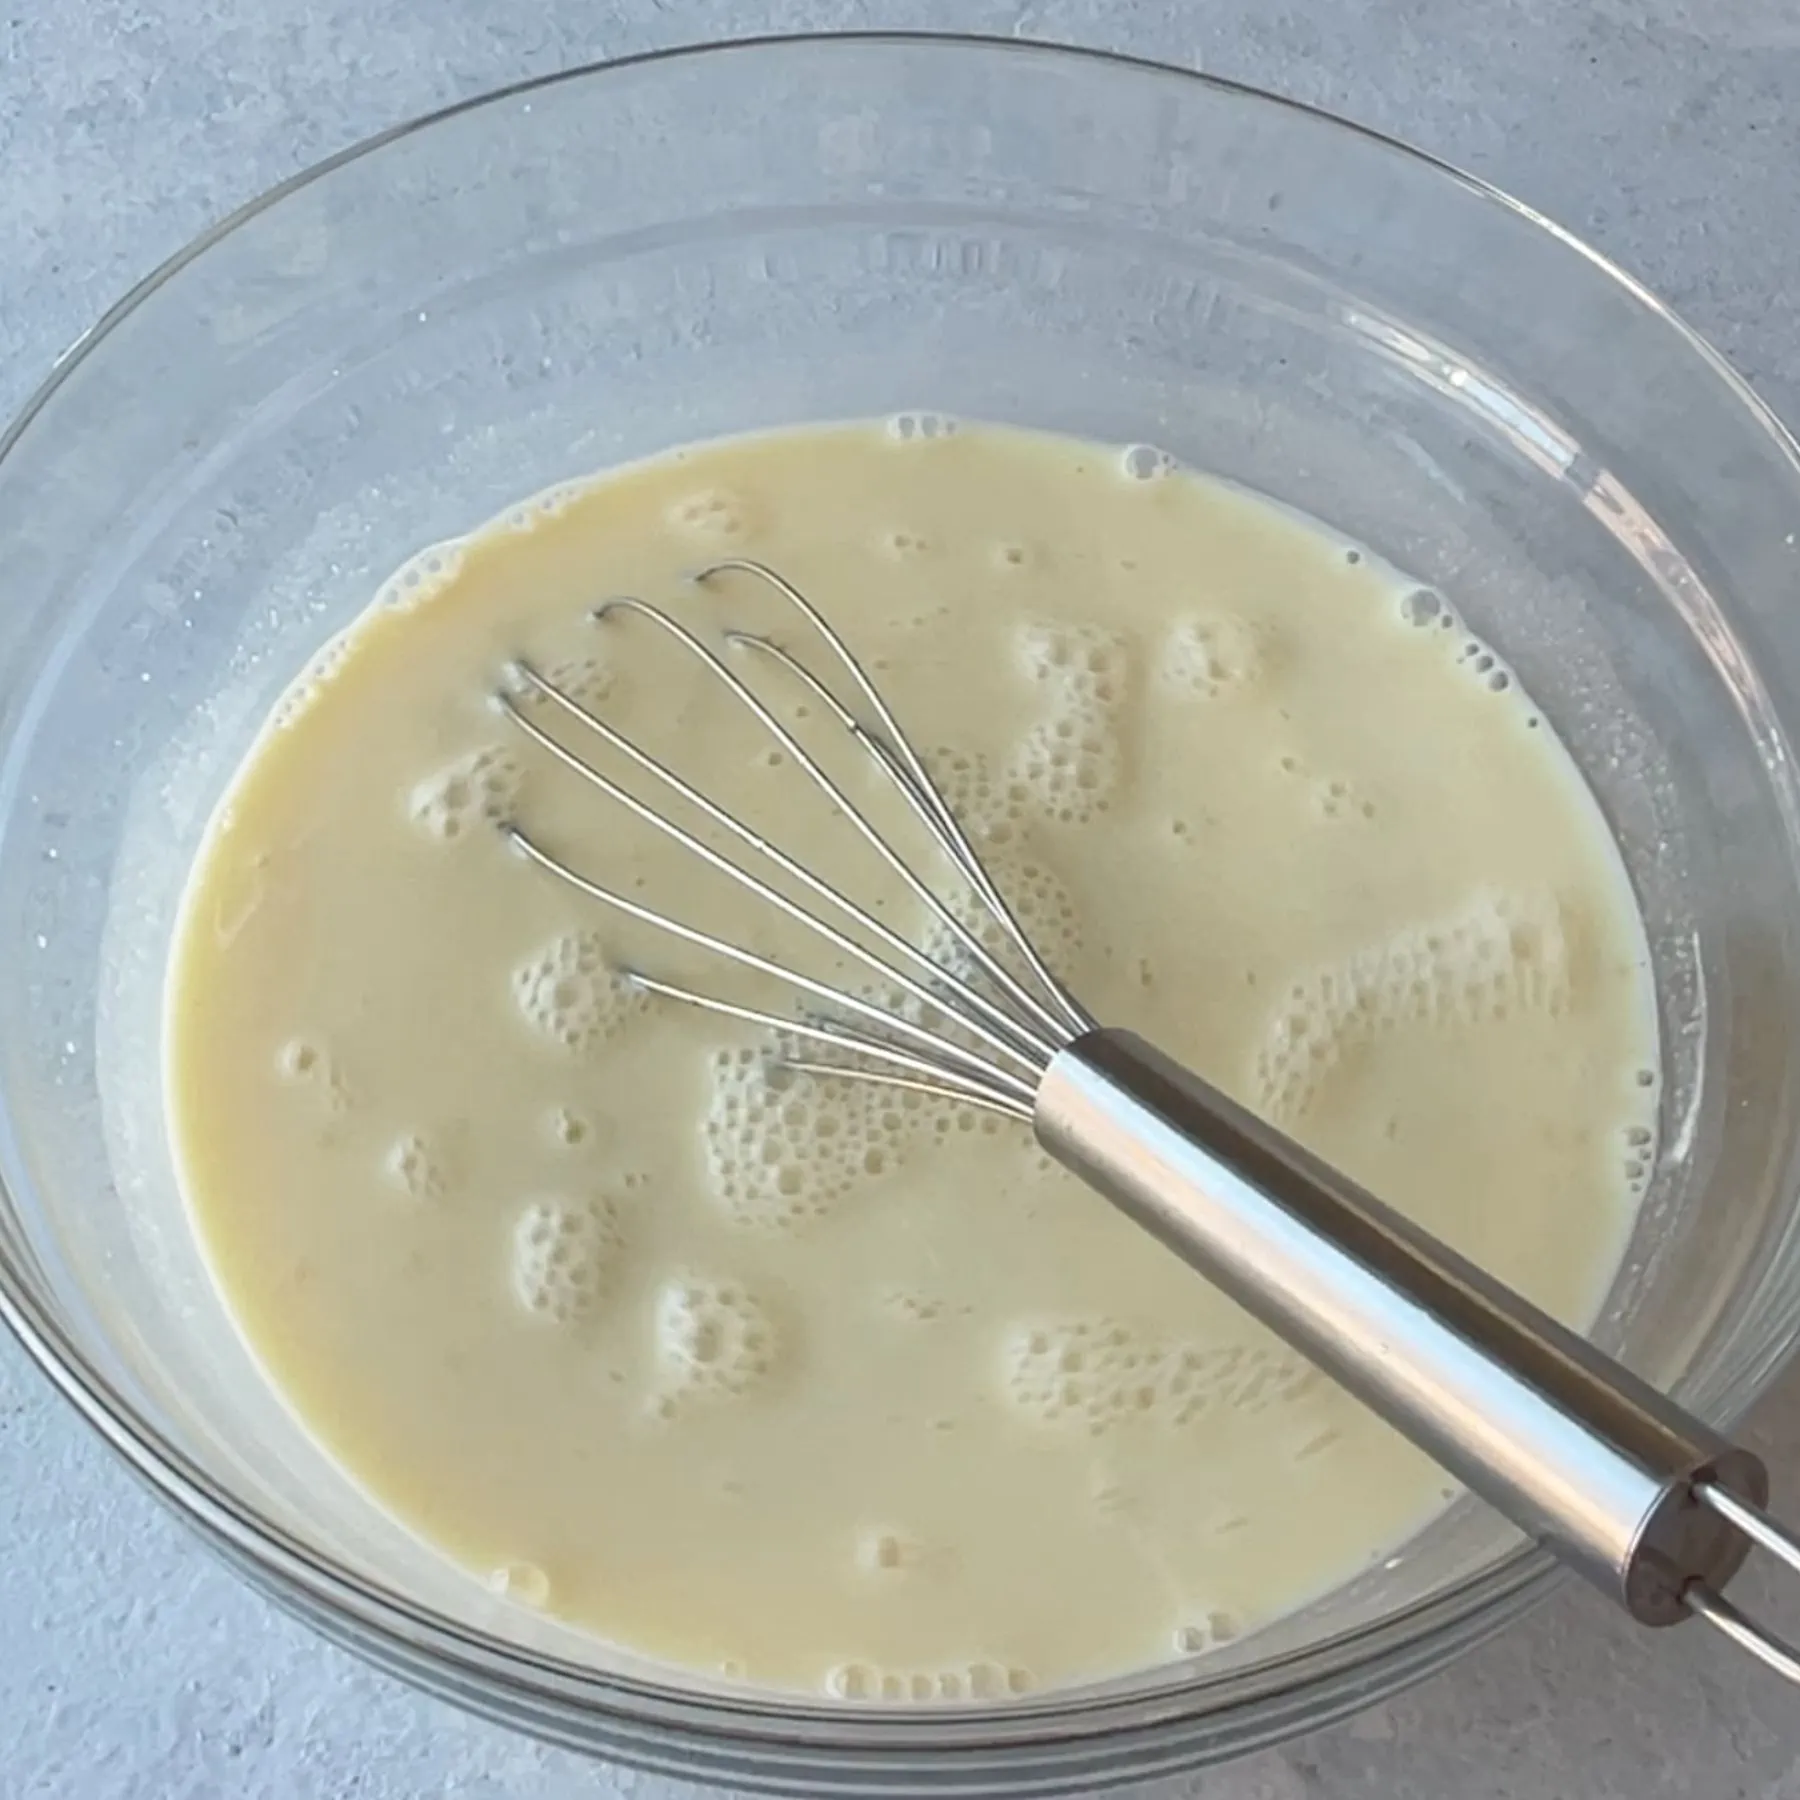 Whisk yogurt mixture in a bowl